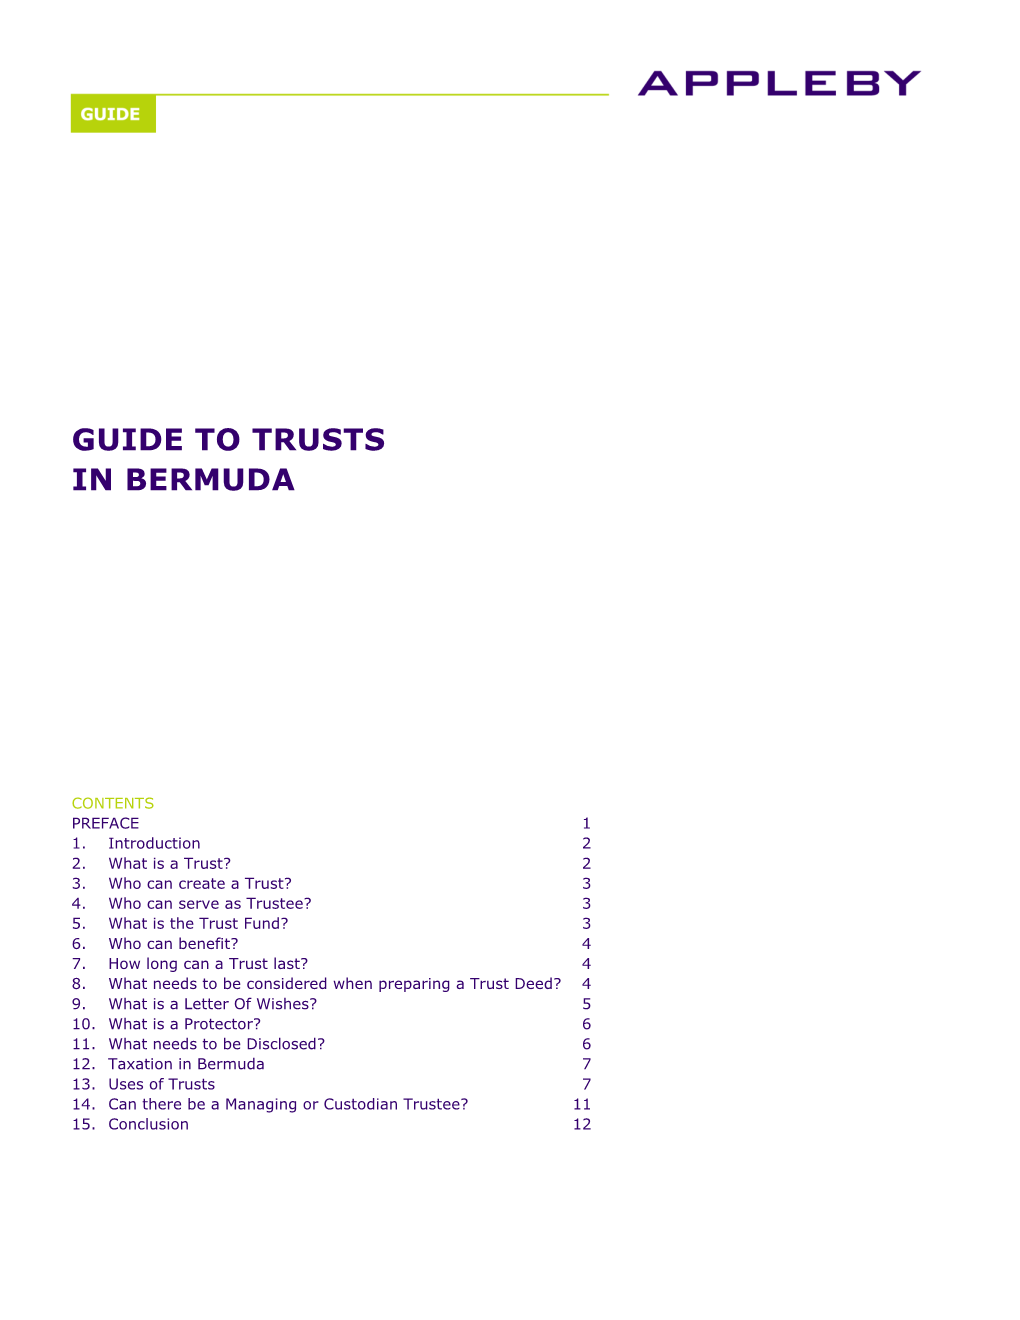 Guide to Trusts in Bermuda